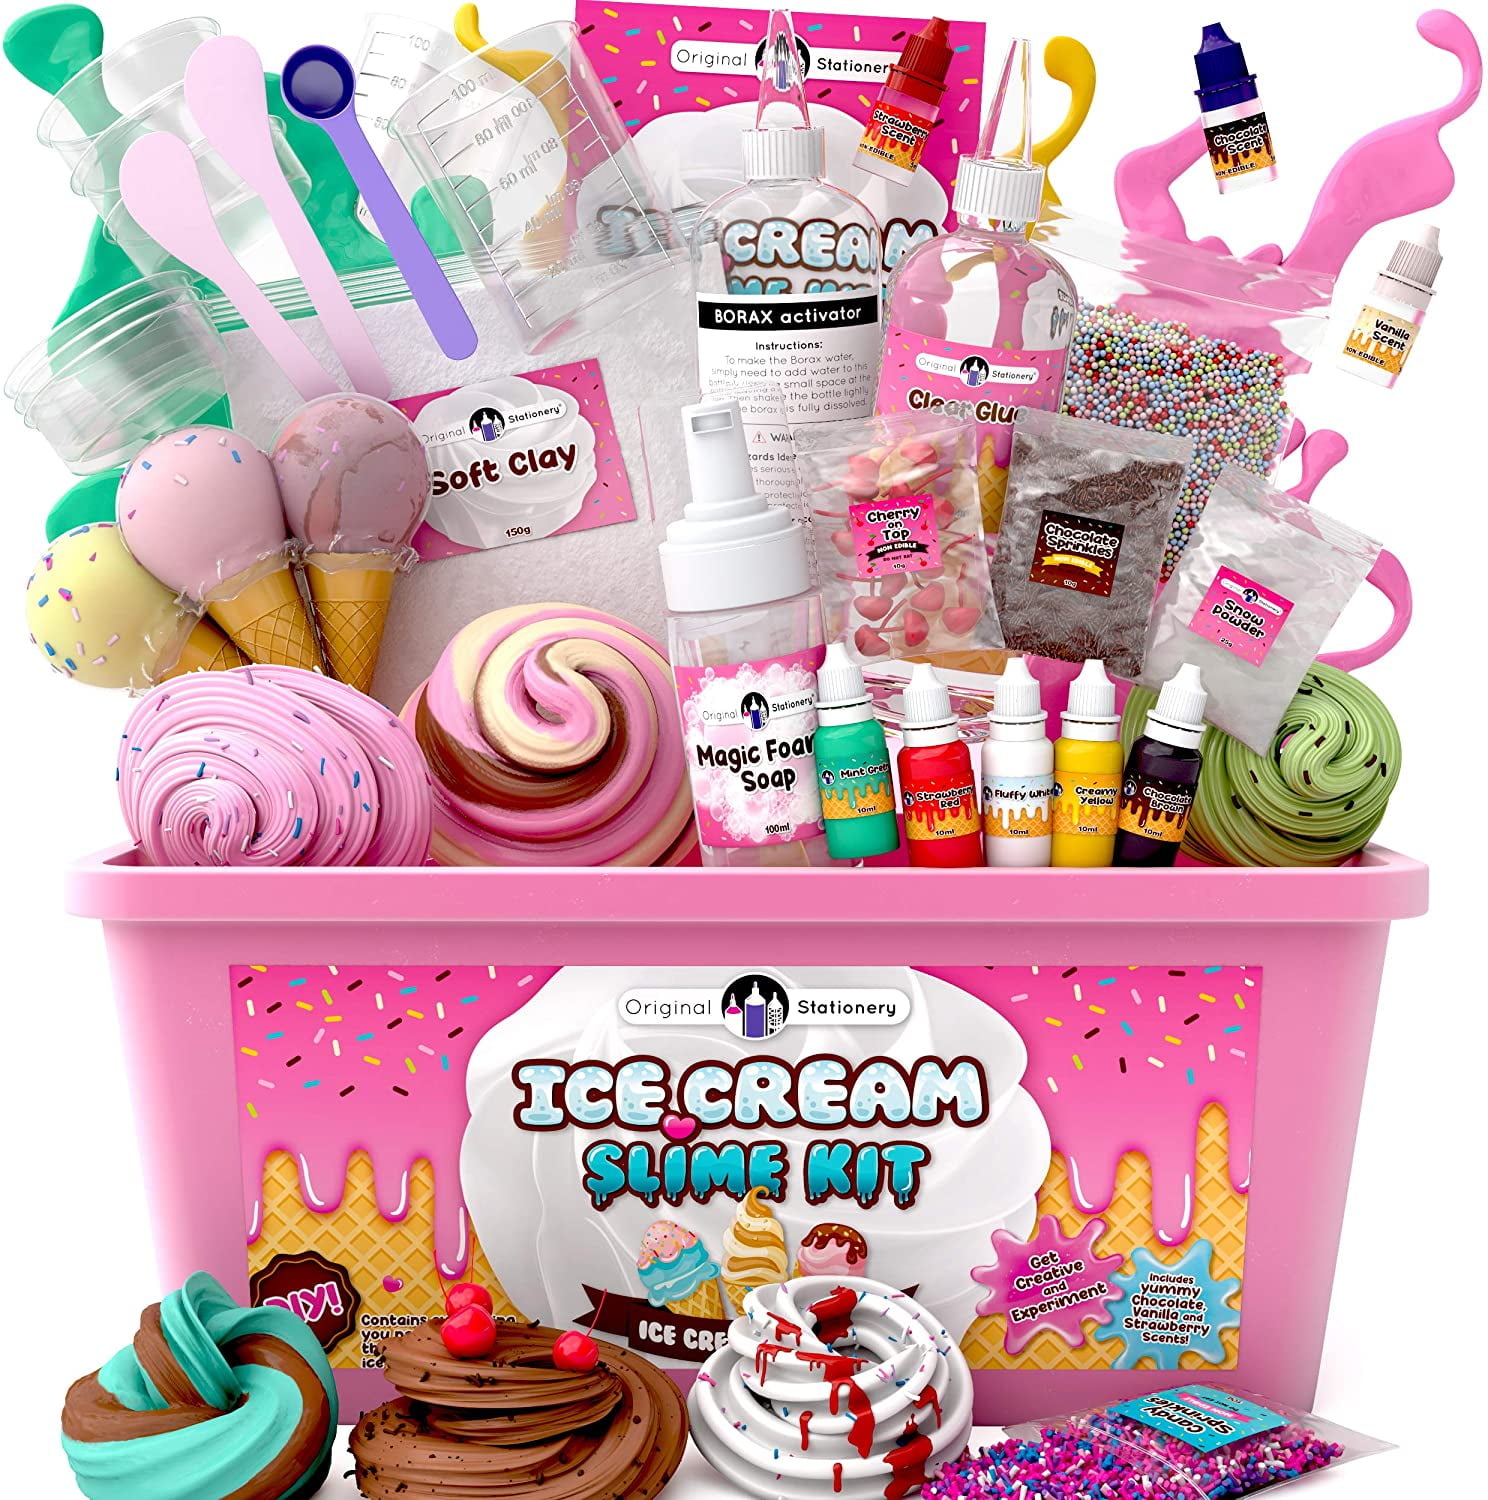 Original Stationery Unicorn Slime Kit Supplies Stuff for Girls for sale online 